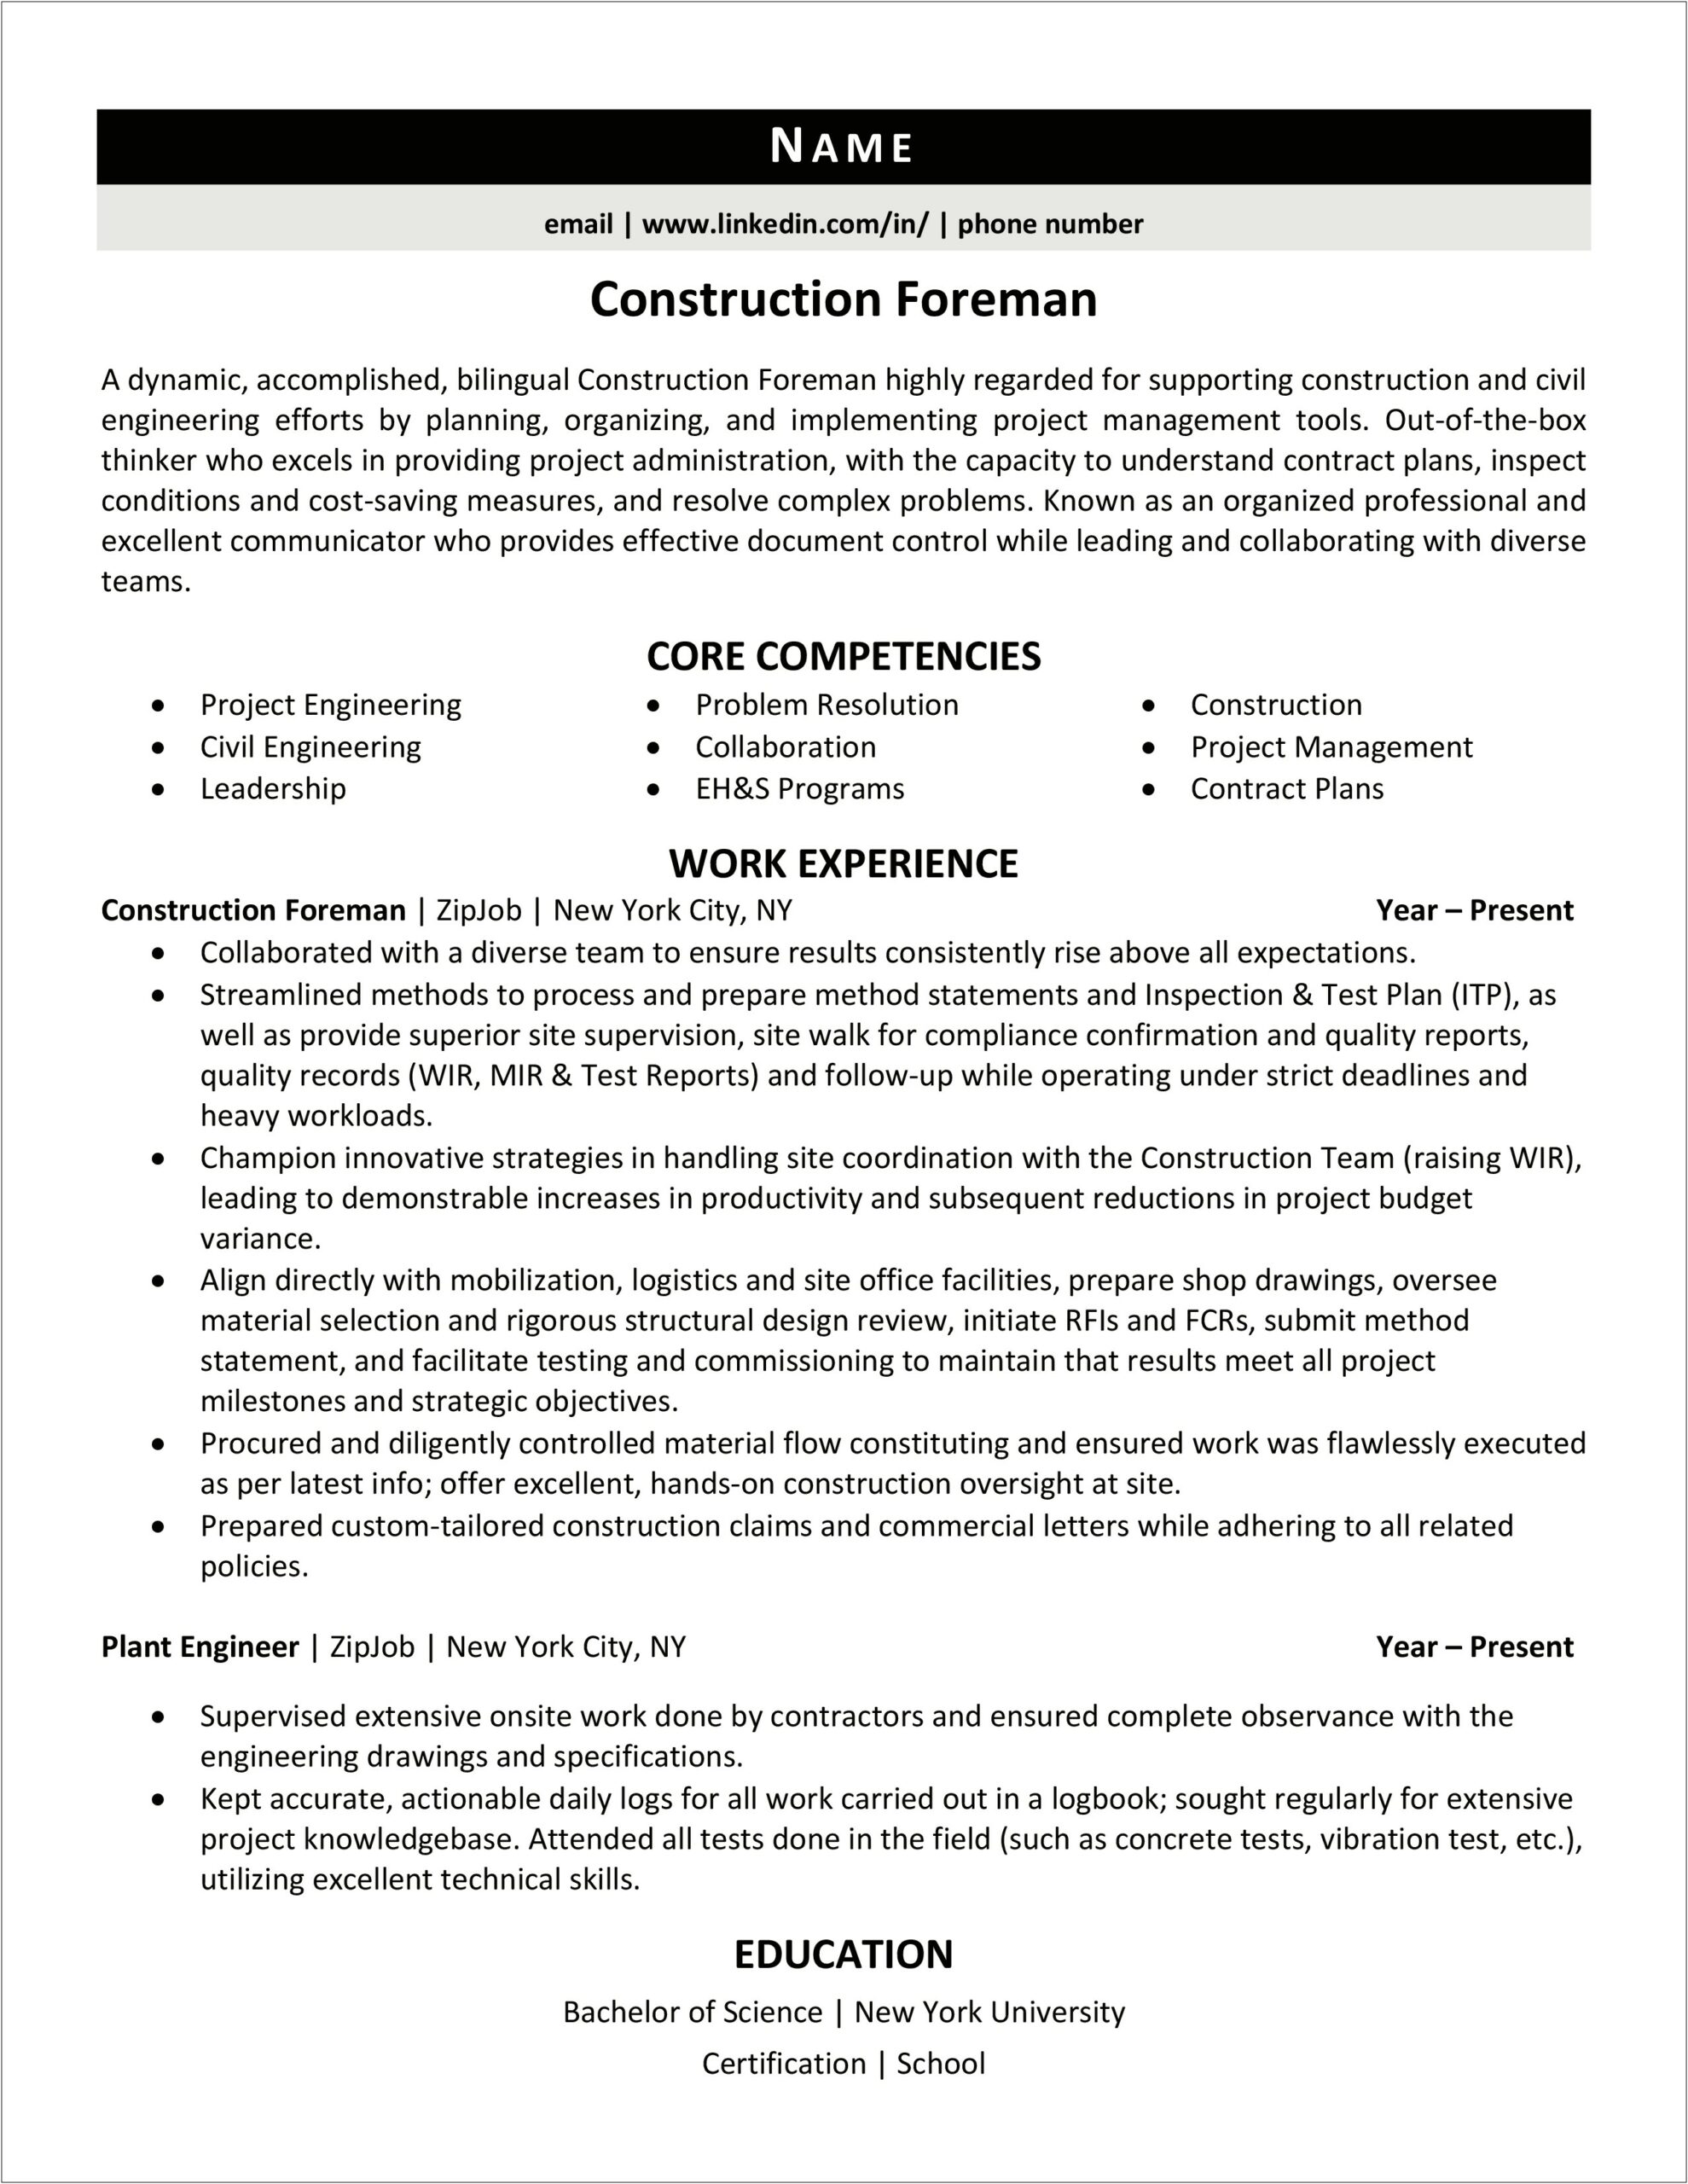 Construction Foreman Job Duties For Resume